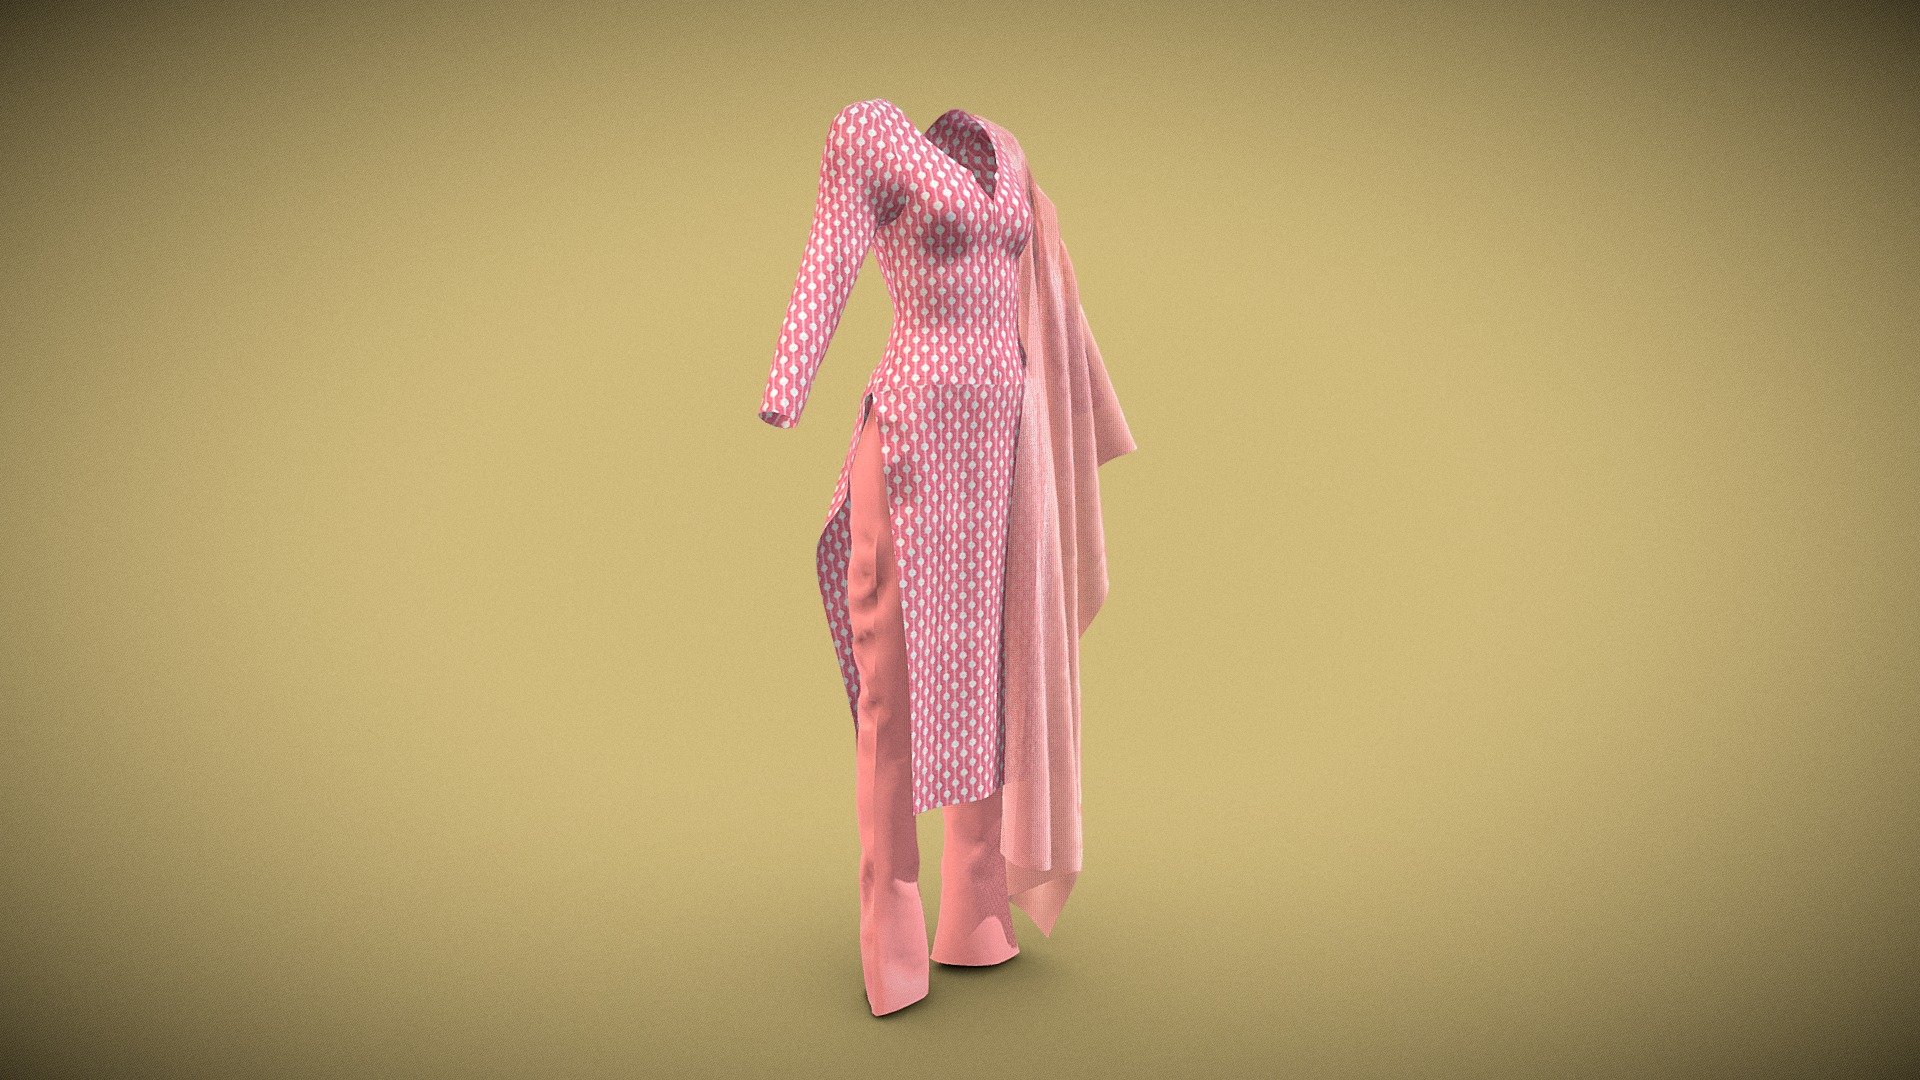 Nepali / Indian Girl Dress
Made in Blender - Kurtha (Nepali / Indian Dress) - Buy Royalty Free 3D model by SAXN 3d model